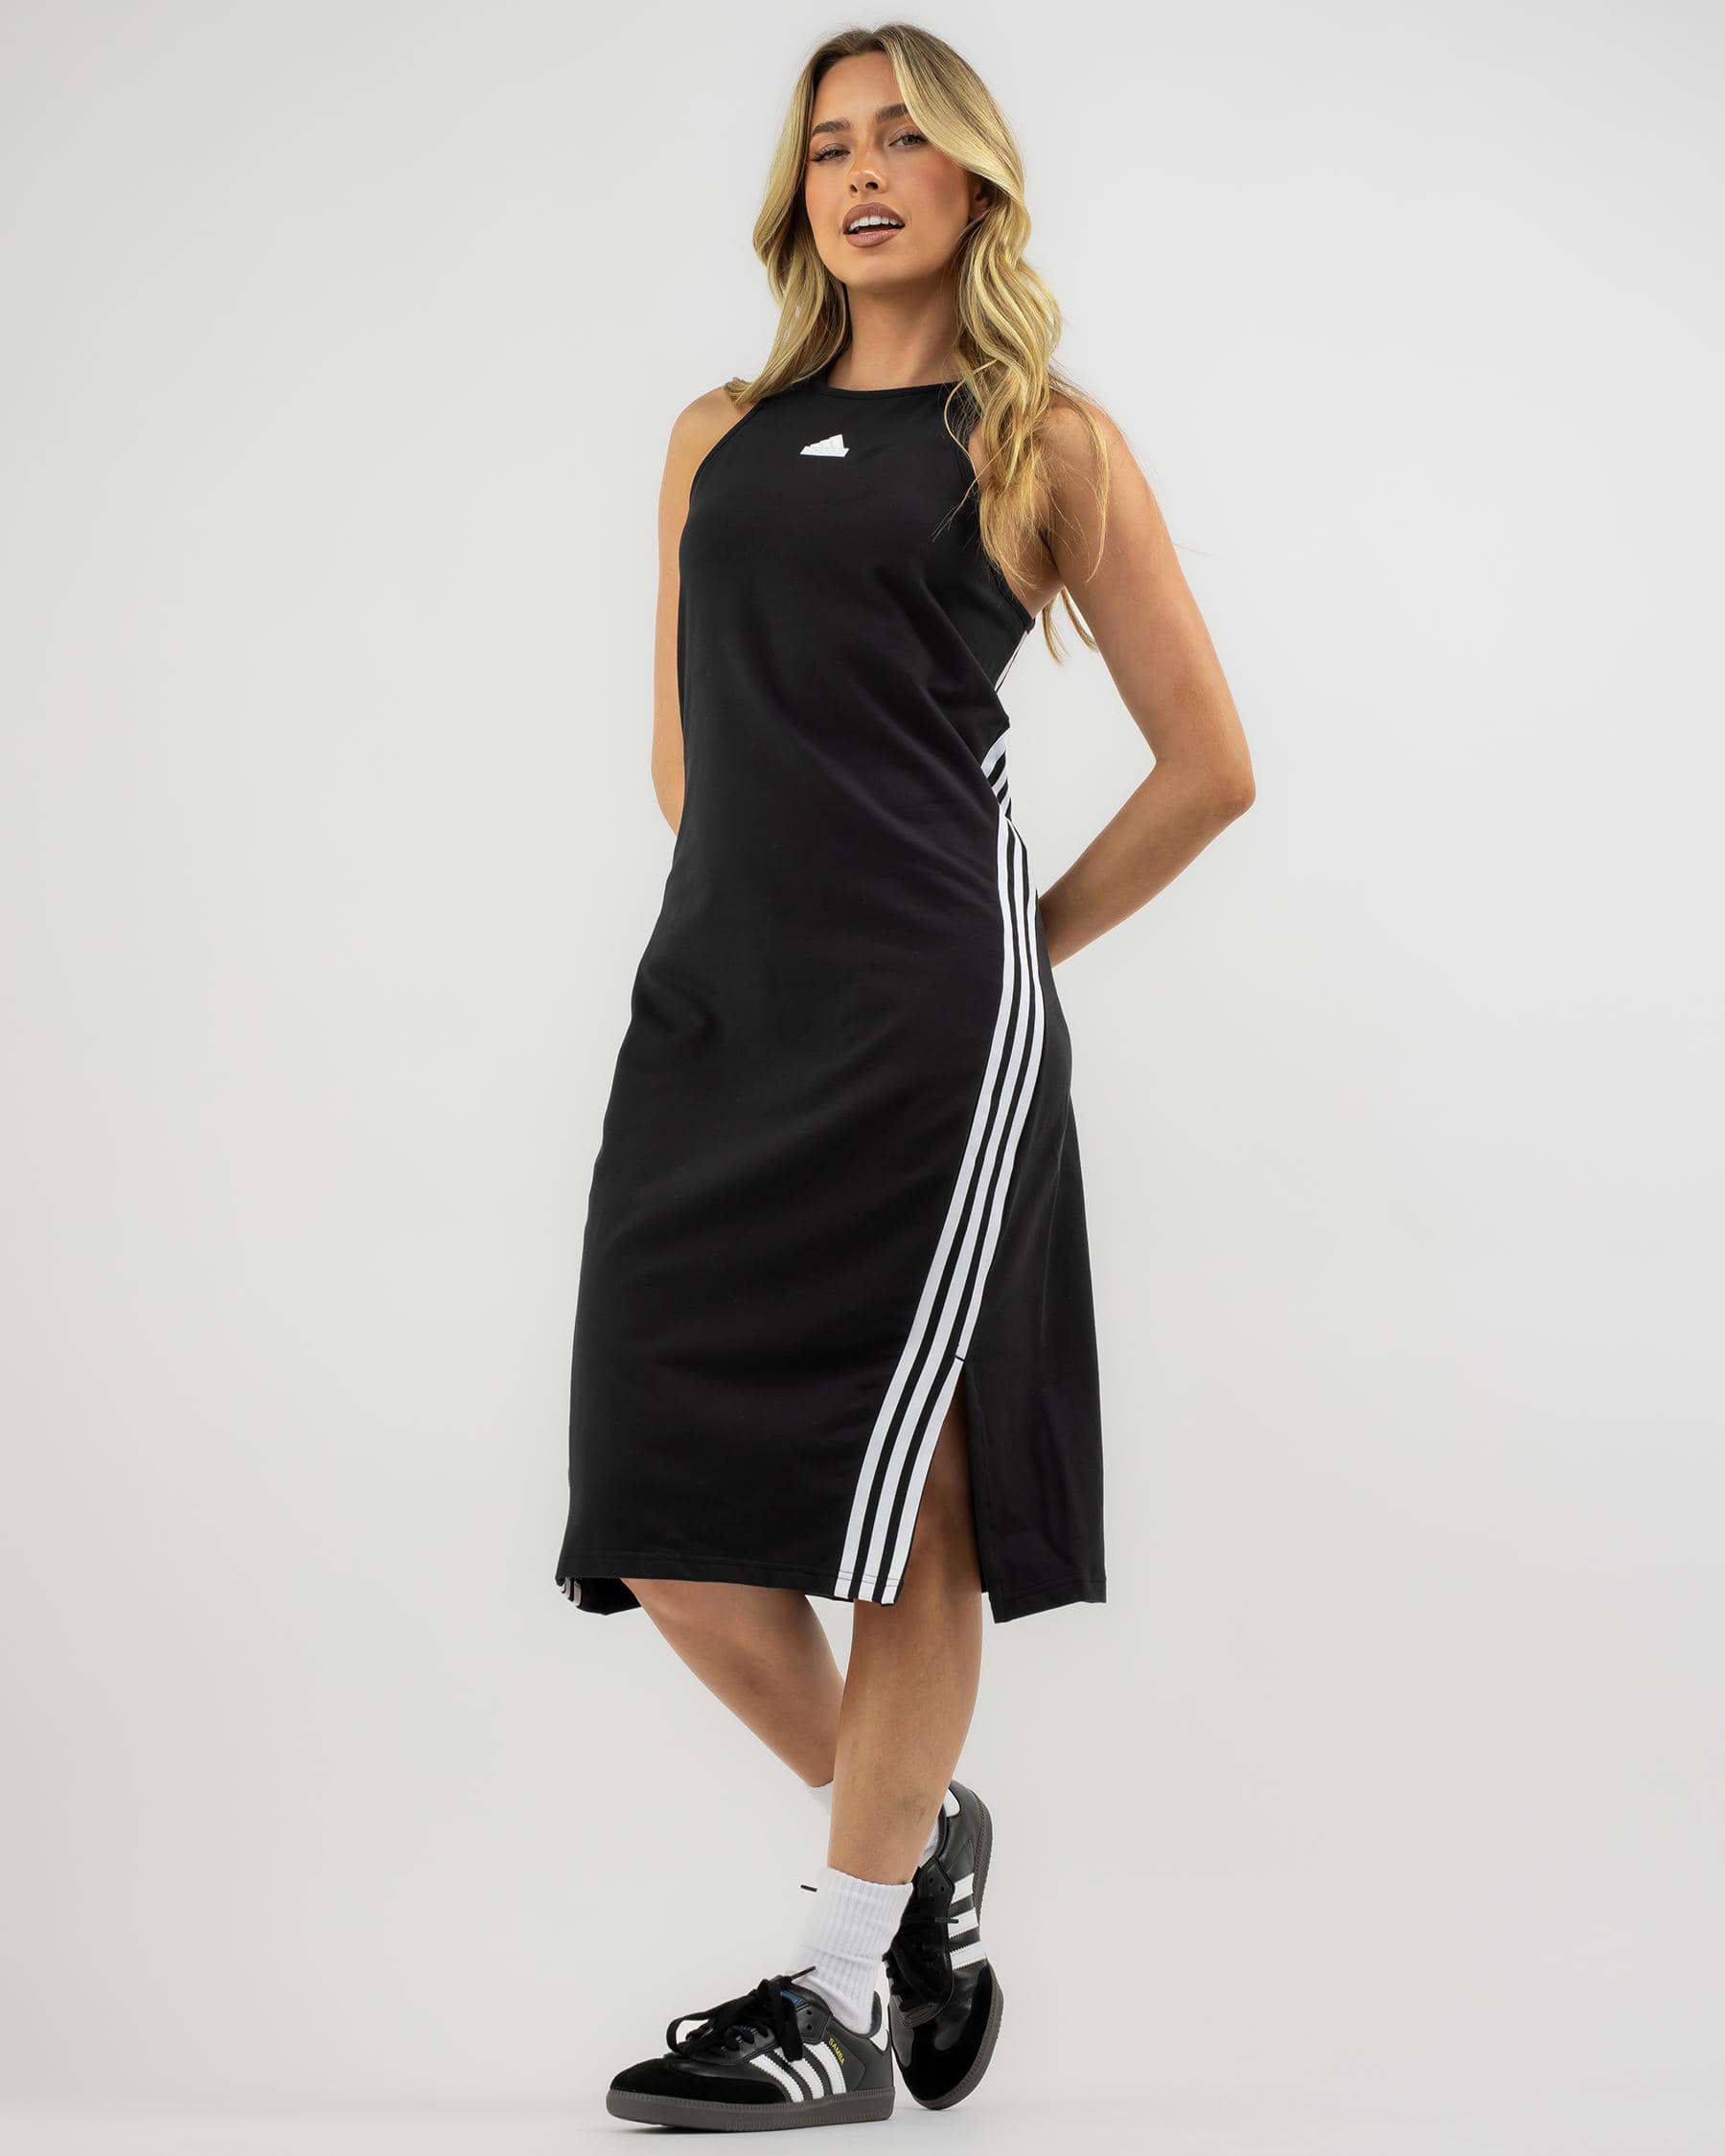 Adidas Future Icon 3 Stripe Dress In Black/white - Fast Shipping & Easy ...